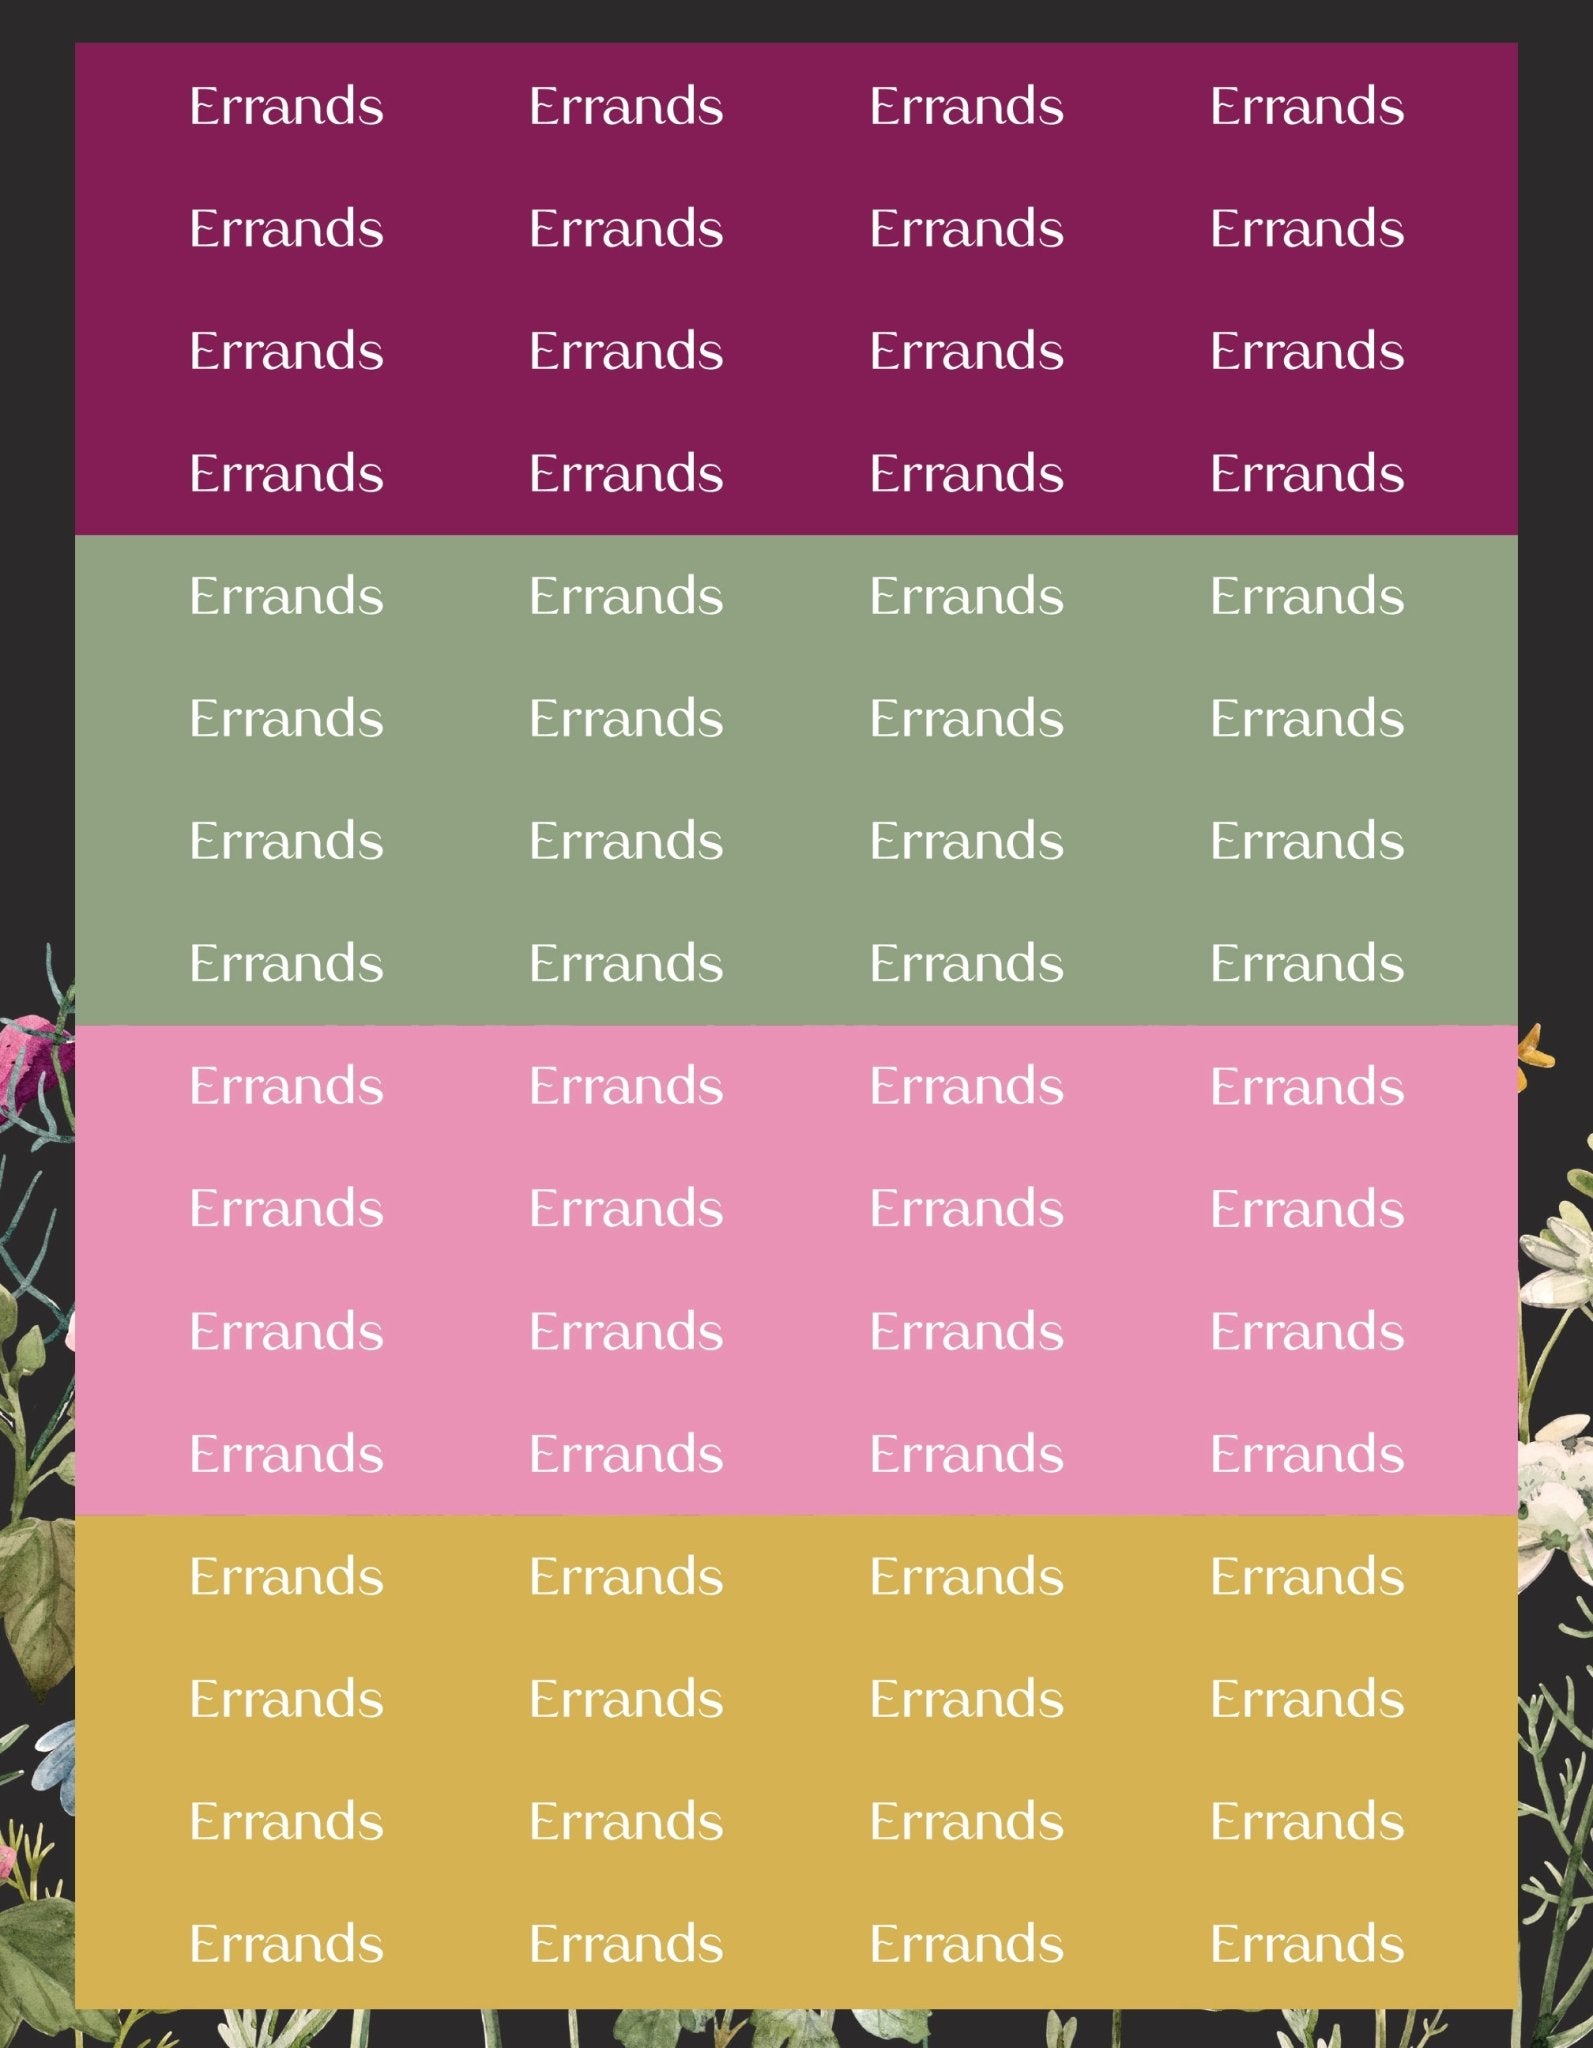 Errands Sticker Sheets - 9 Designs/Colors - Colibri Paper Co